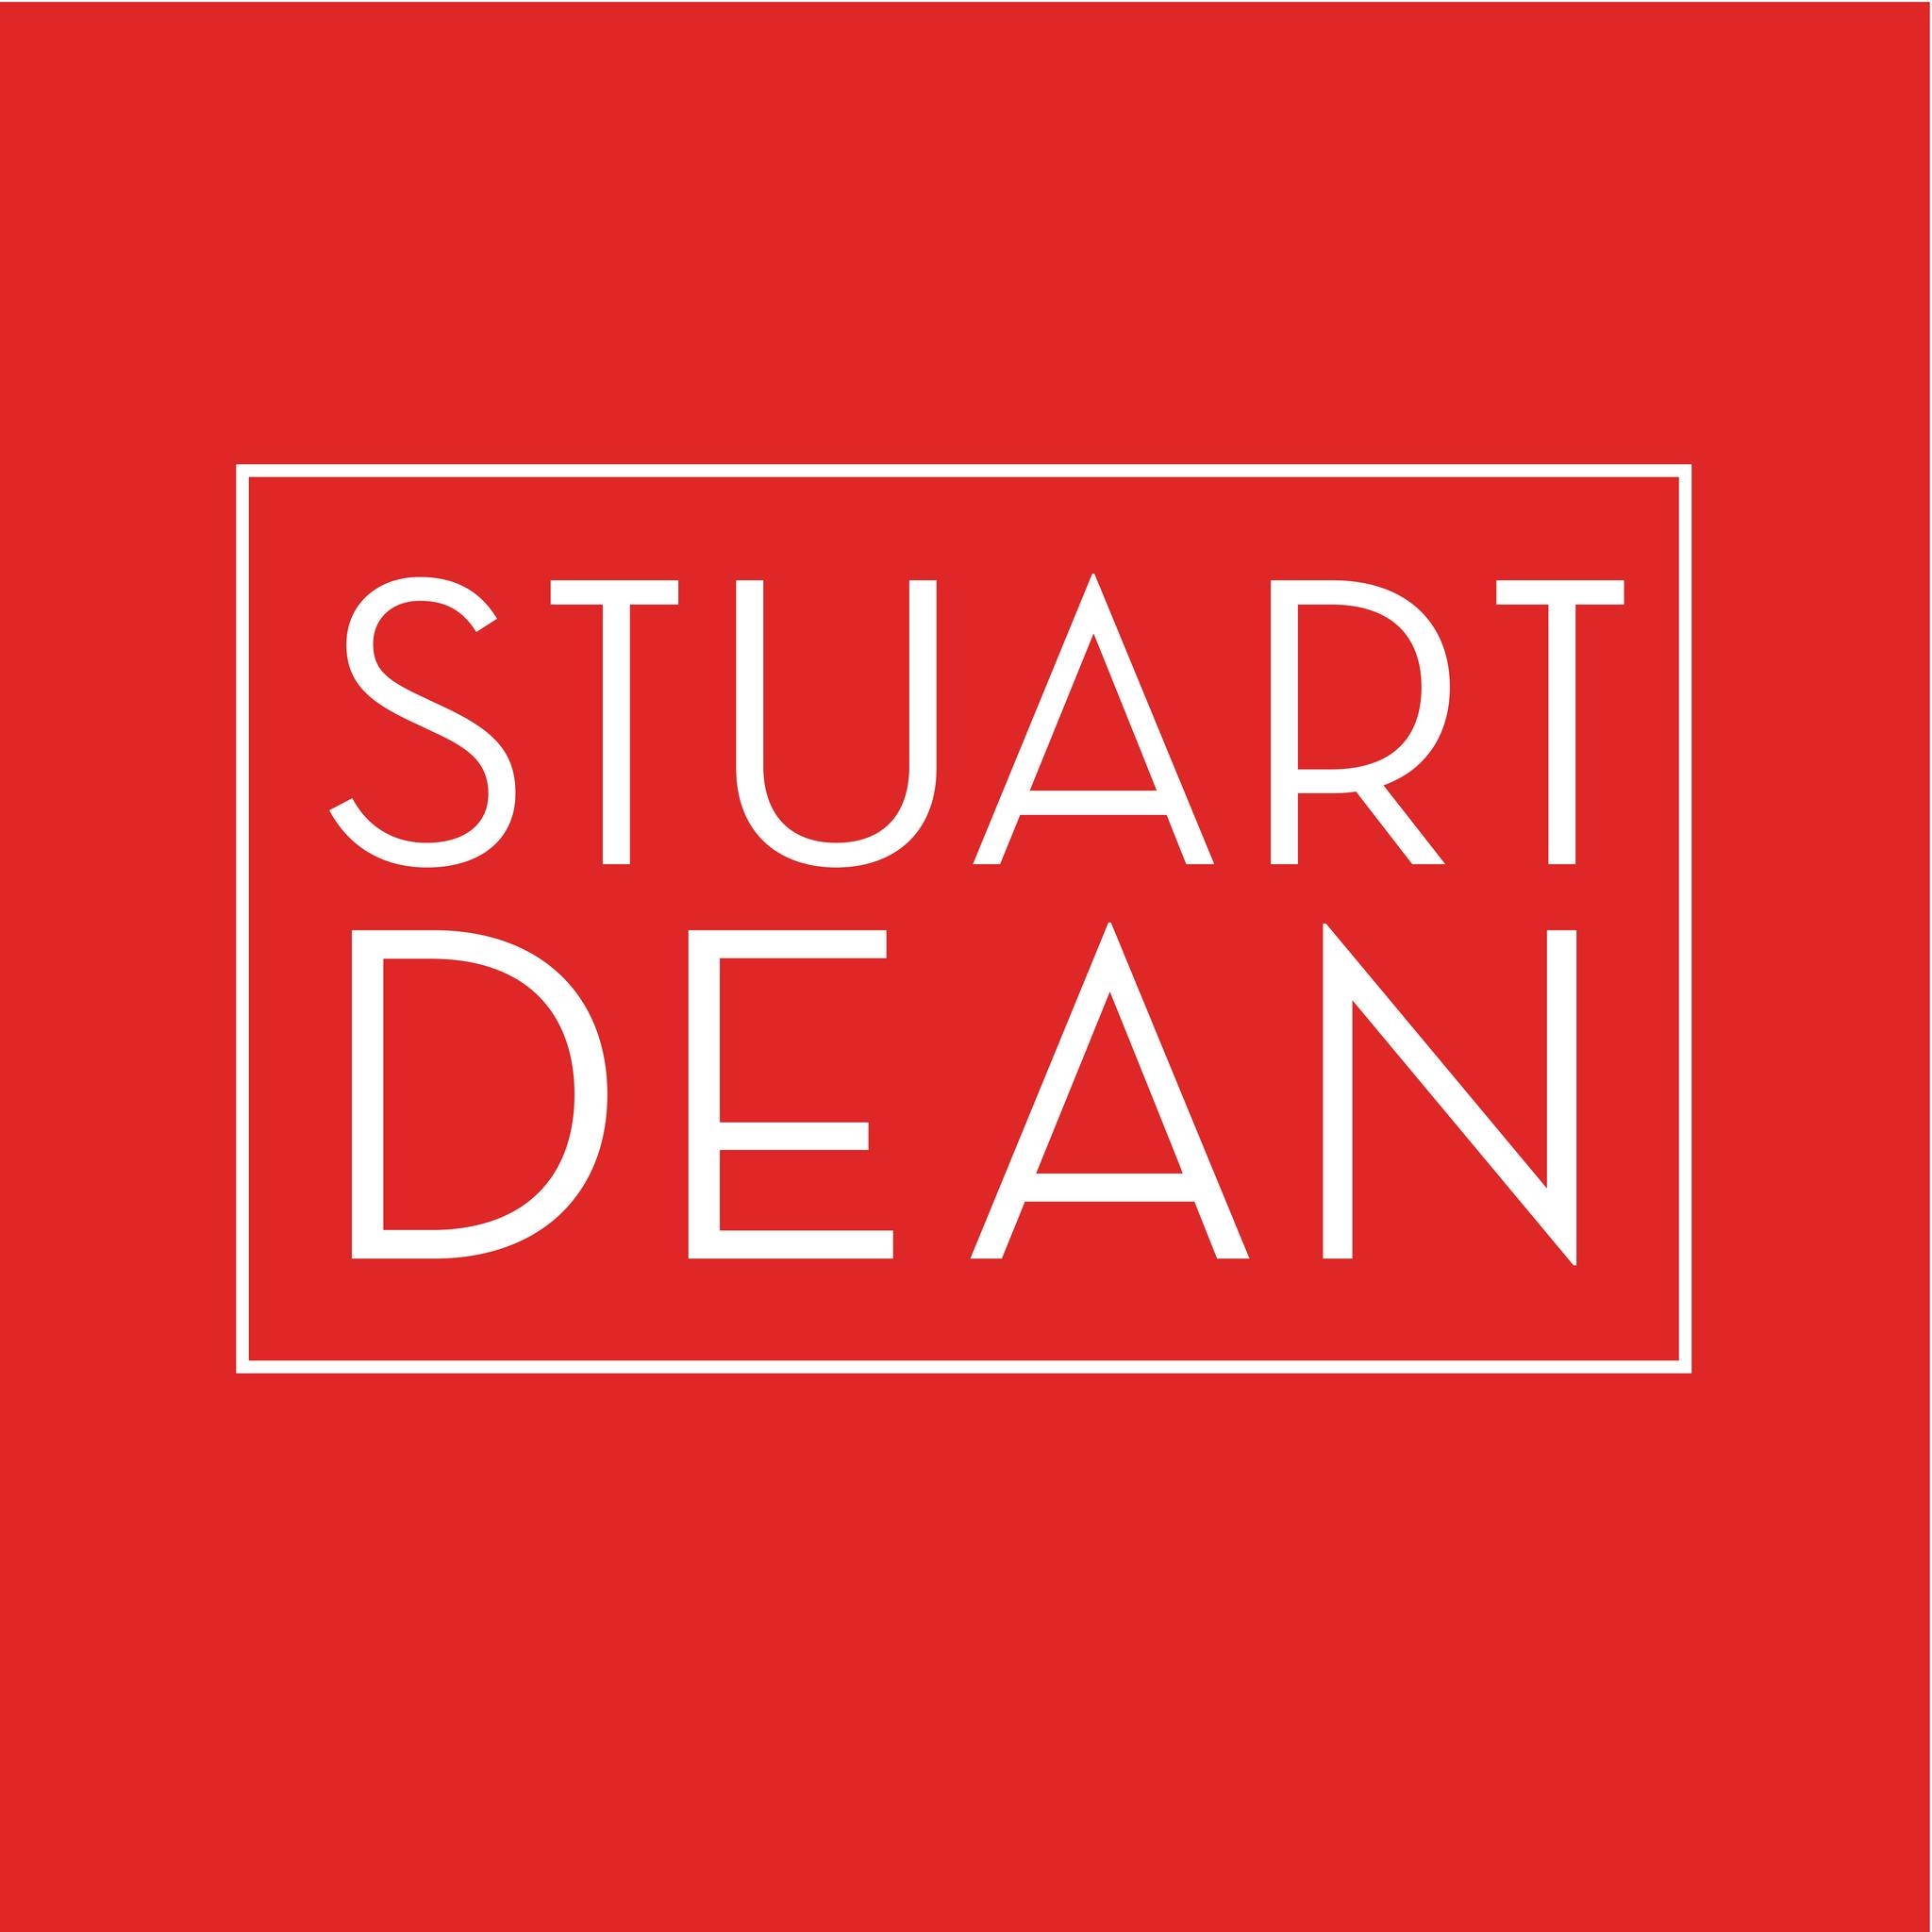 Stuart Dean